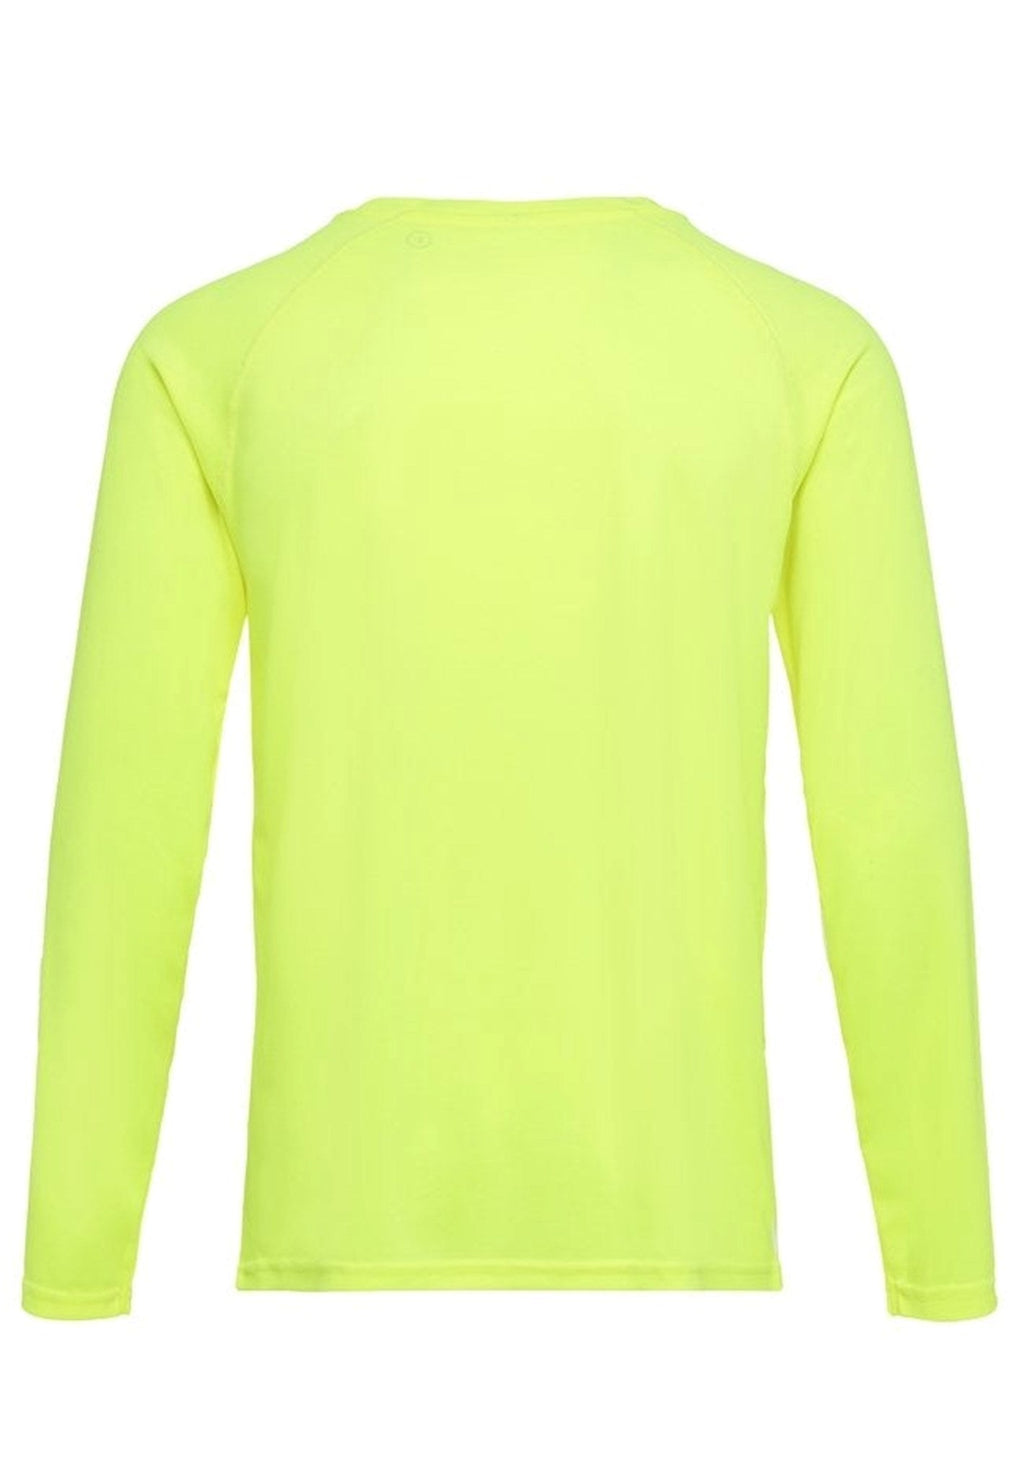 Long-sleeved Training T-shirt - Neon Yellow